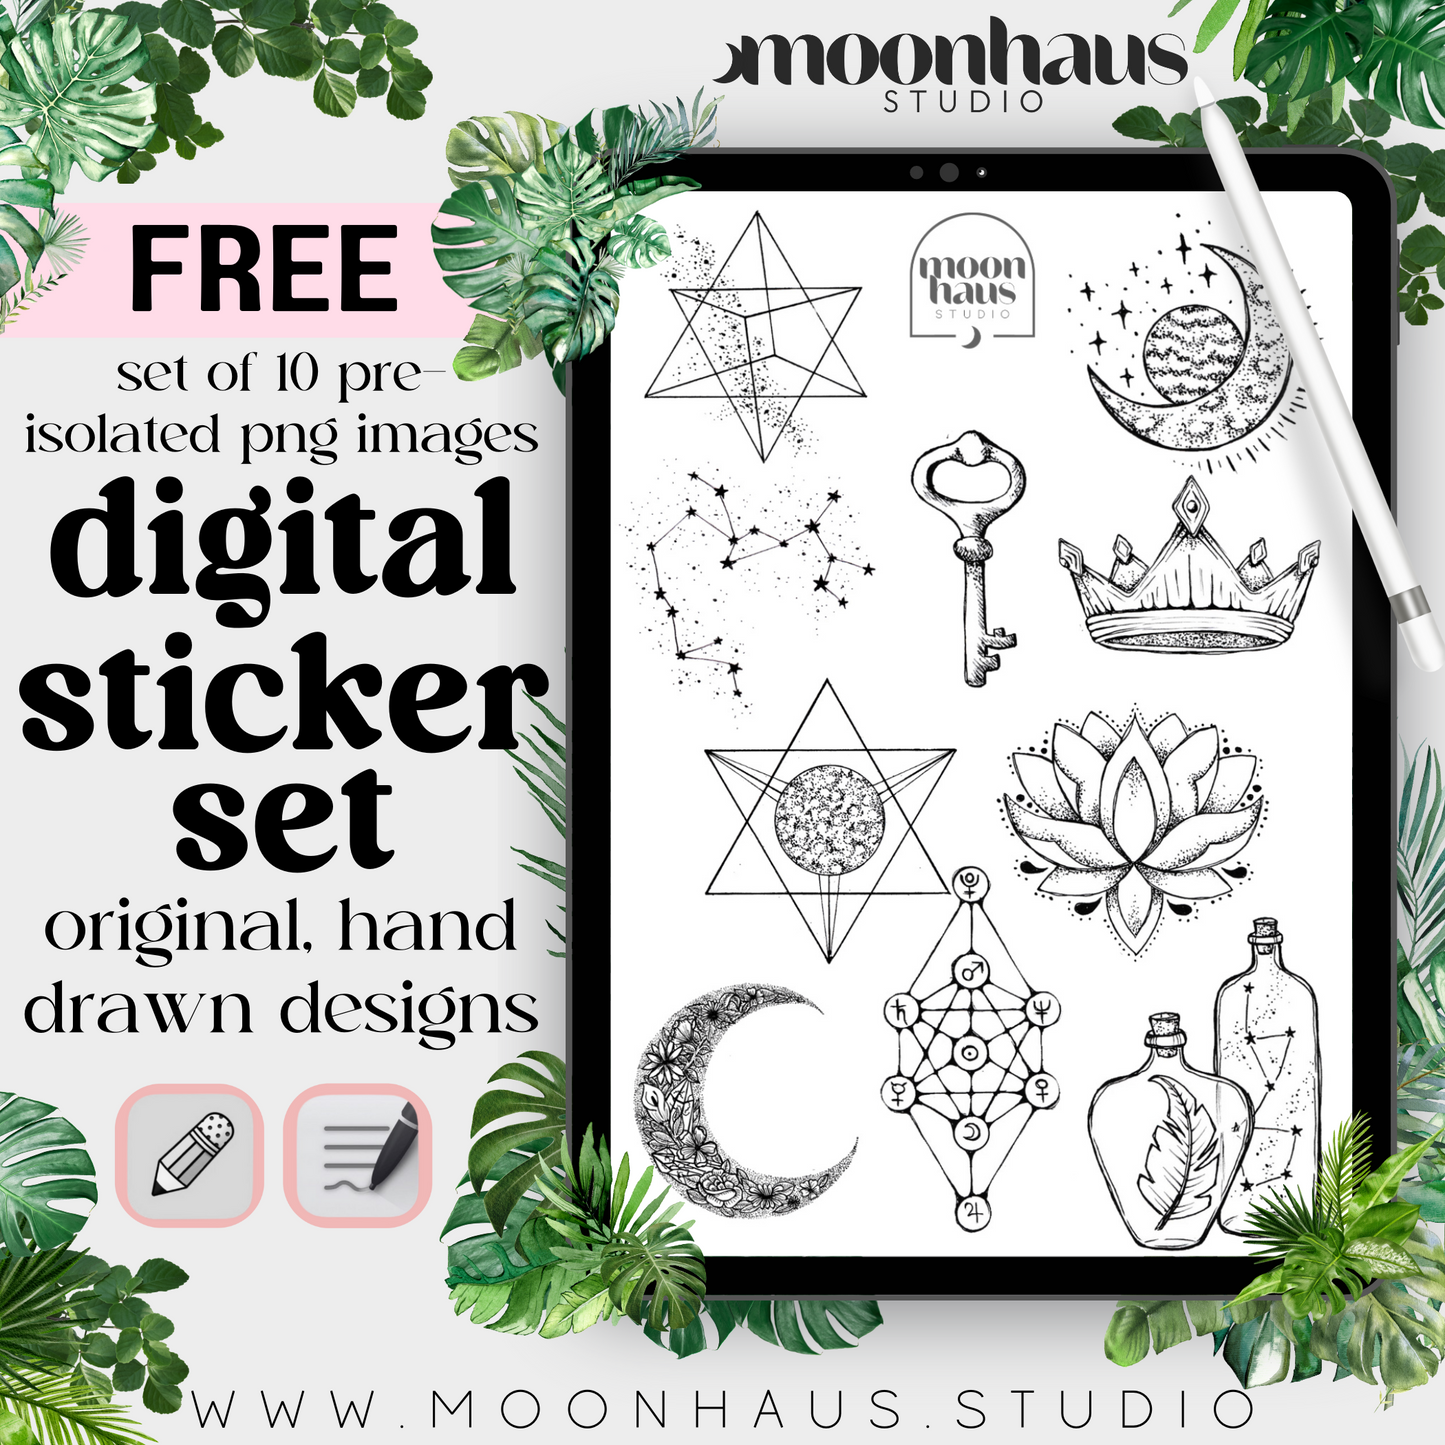 free download: set of 10 digital stickers | hand drawn, original design, freebies